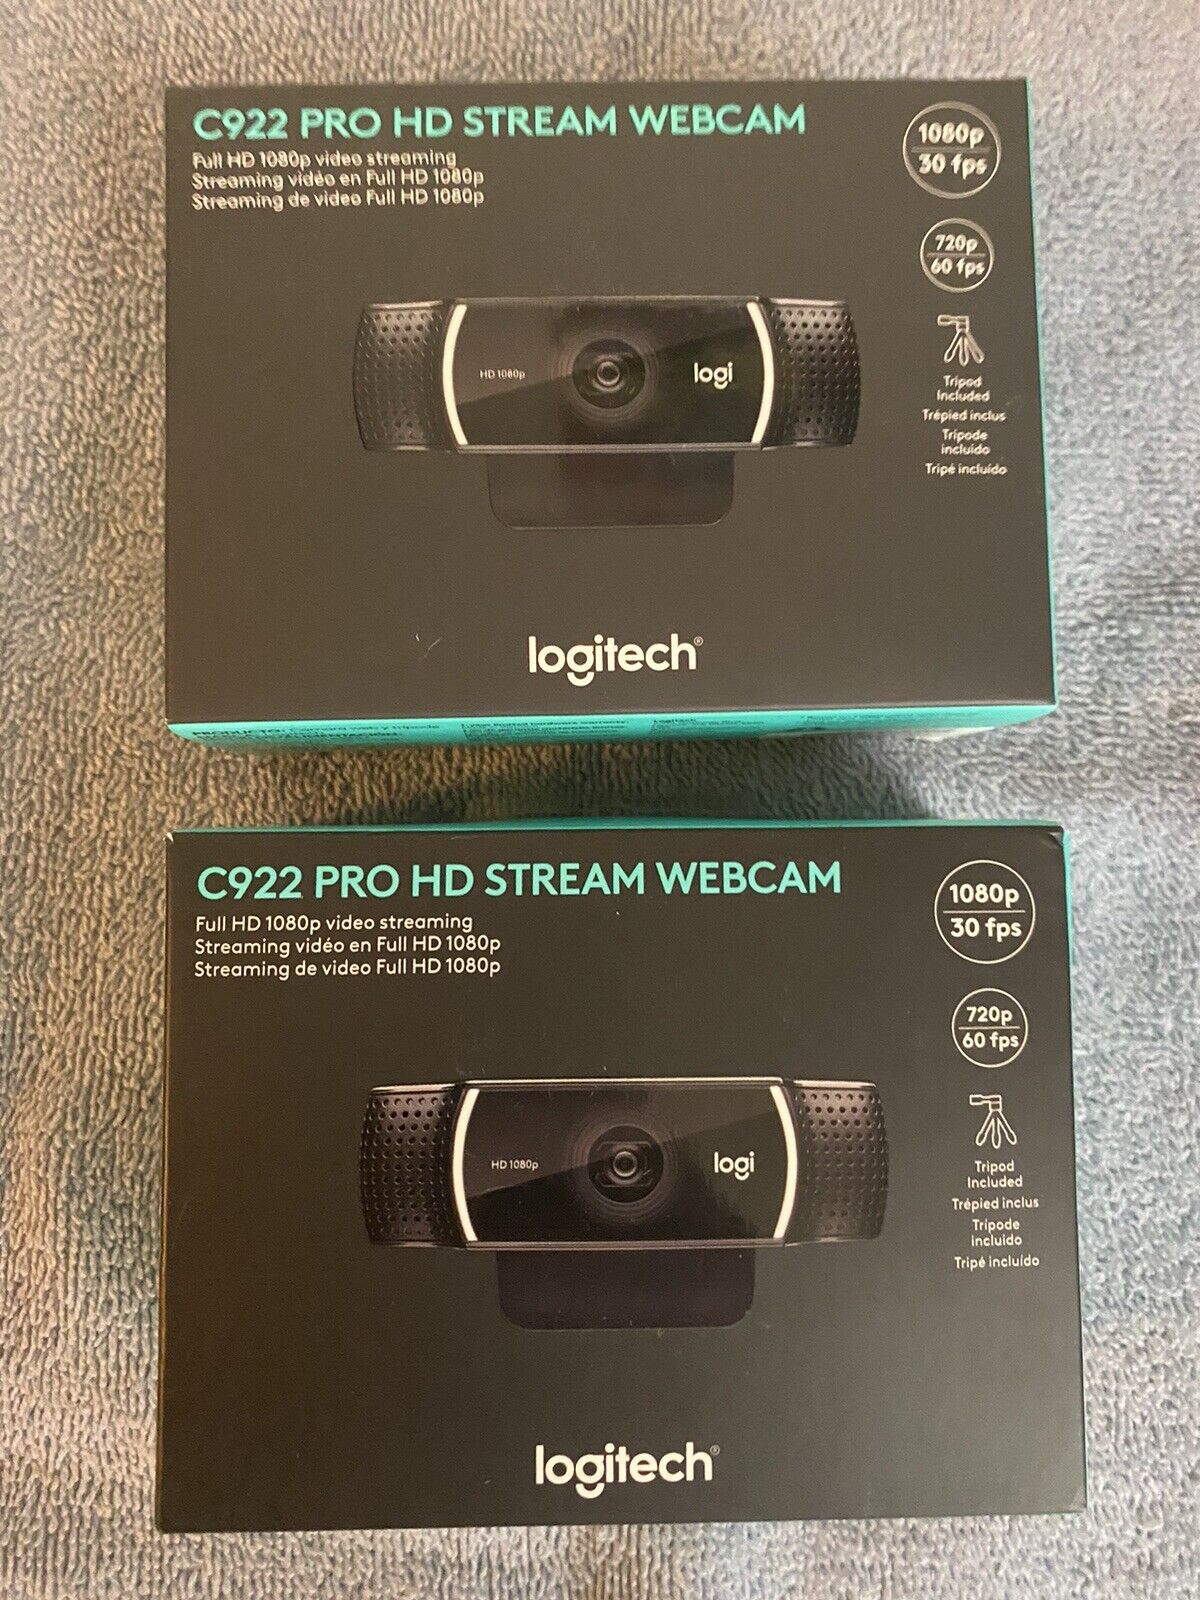 Logitech C922 Pro HD Stream Webcam 1080p - New In Box (LOT OF 2)